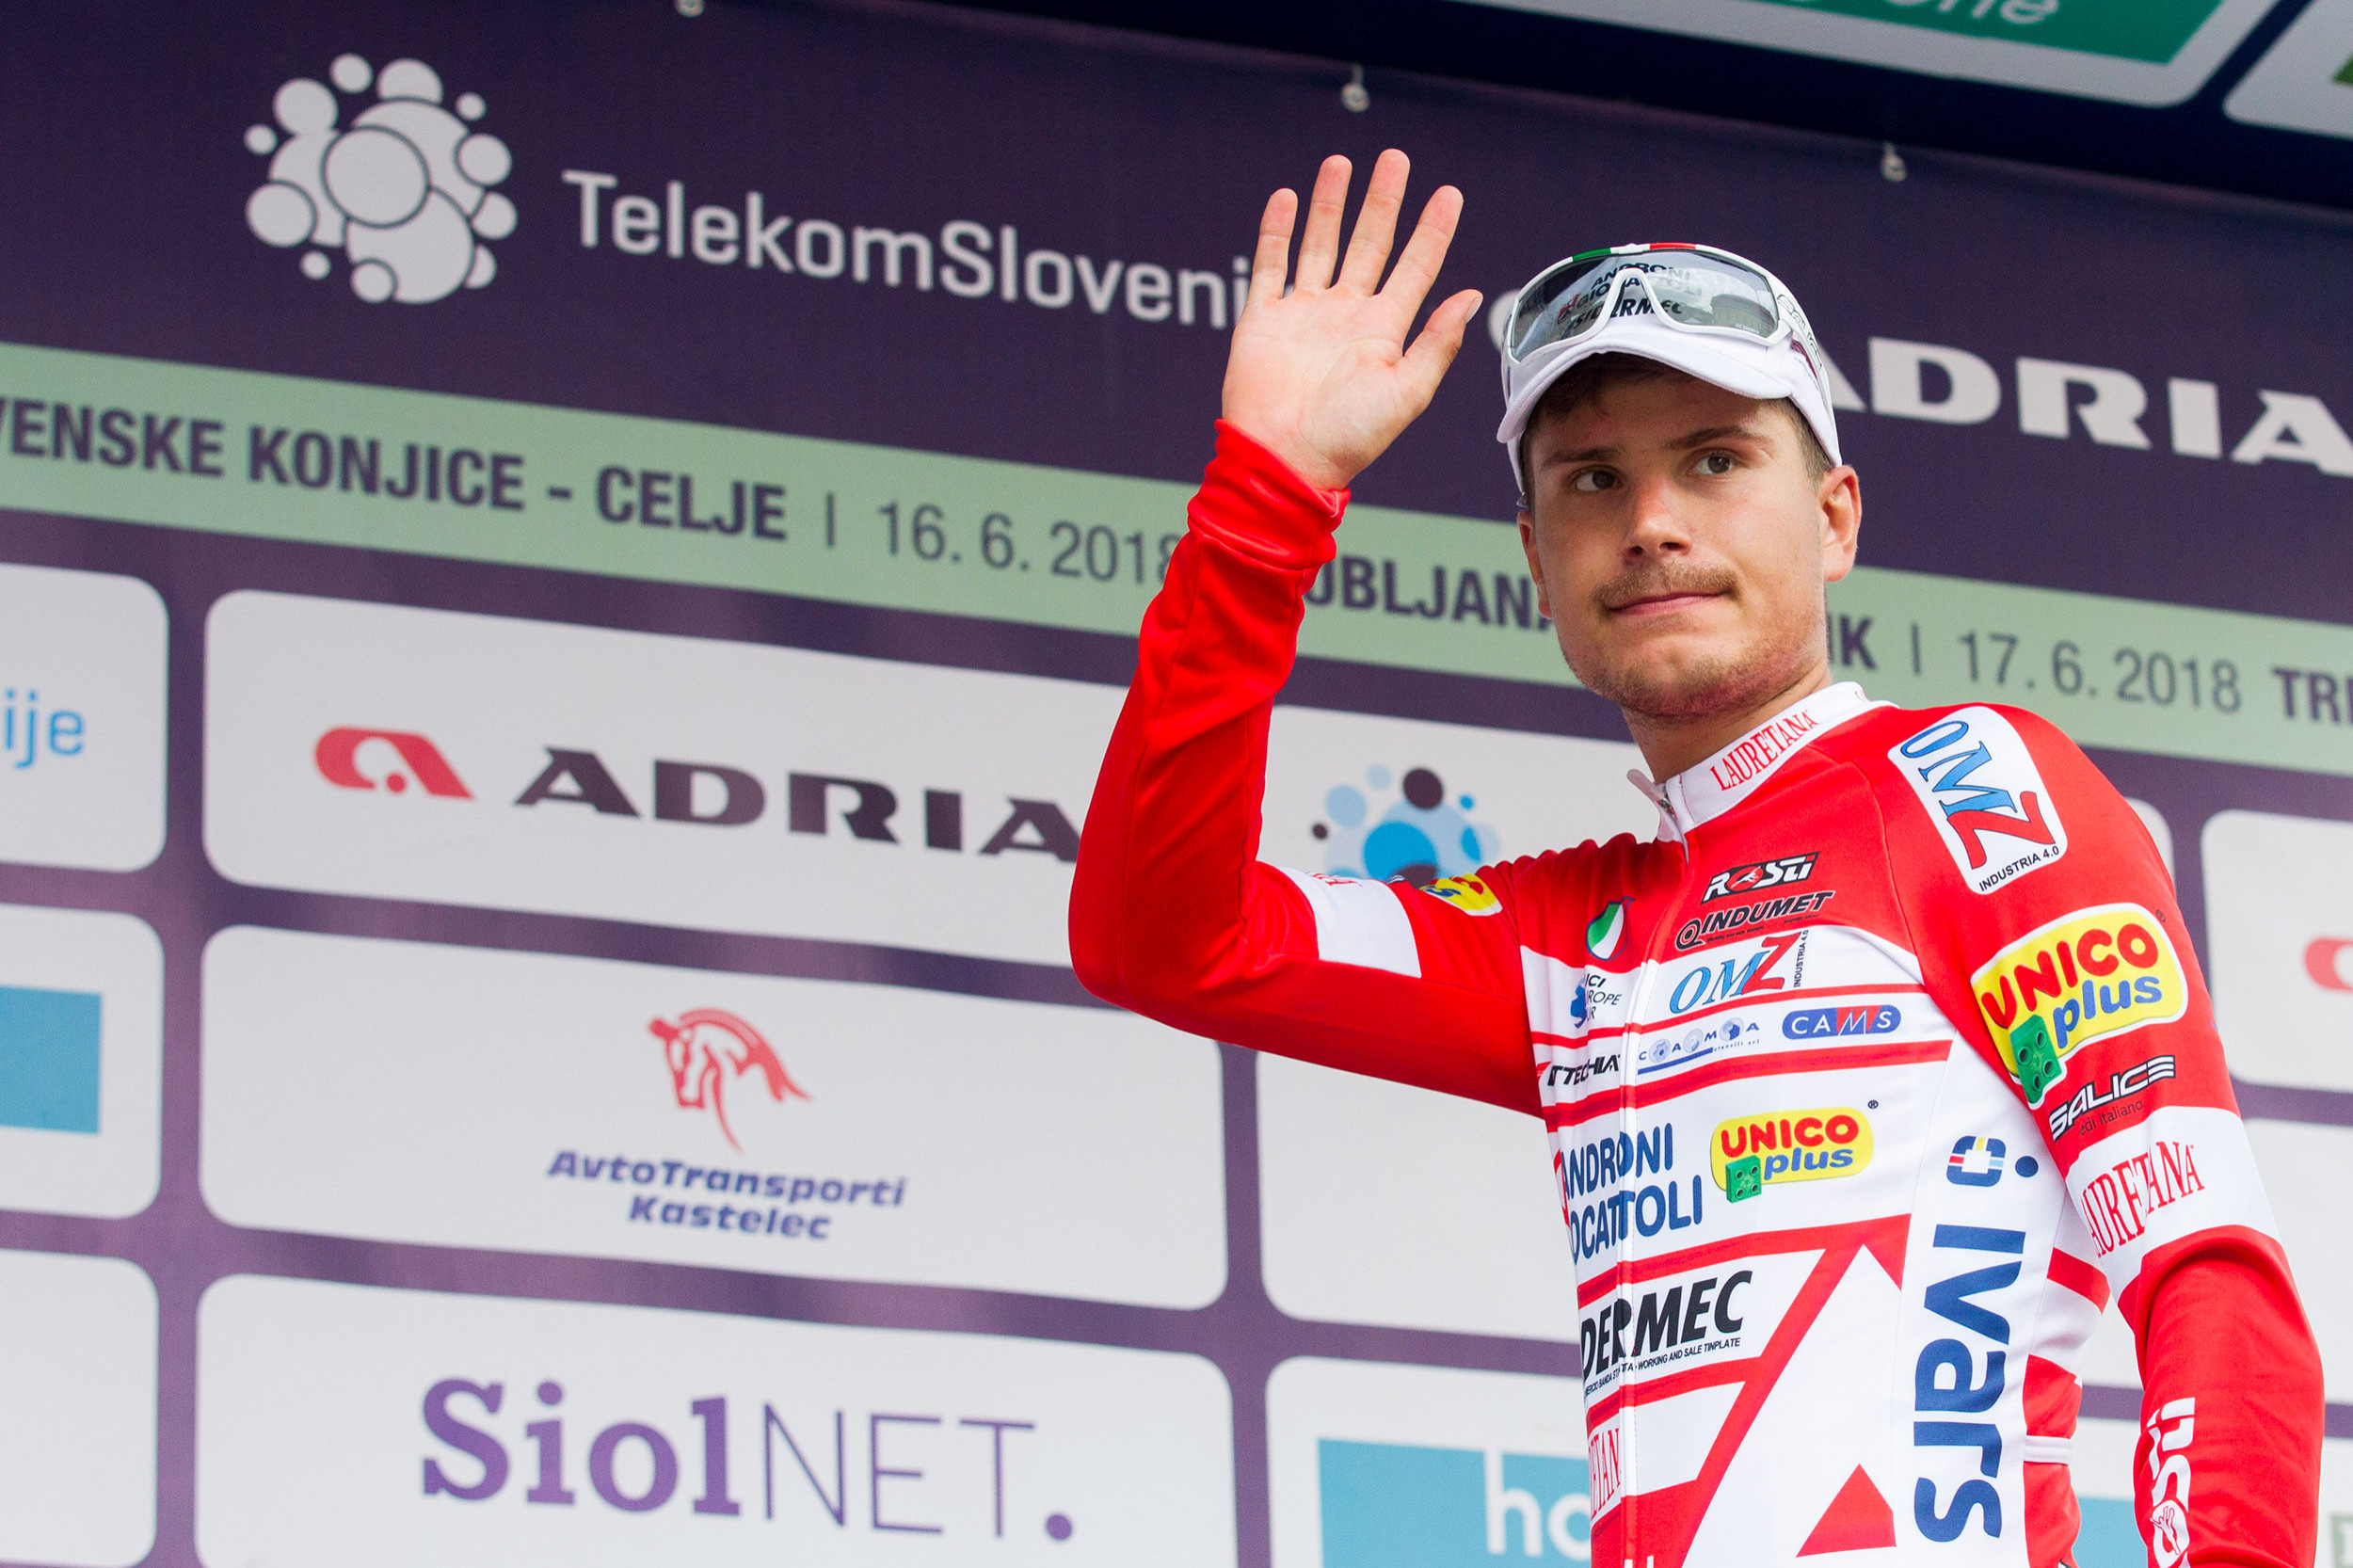 Today’s hero of Giro will race Tour of Slovenia